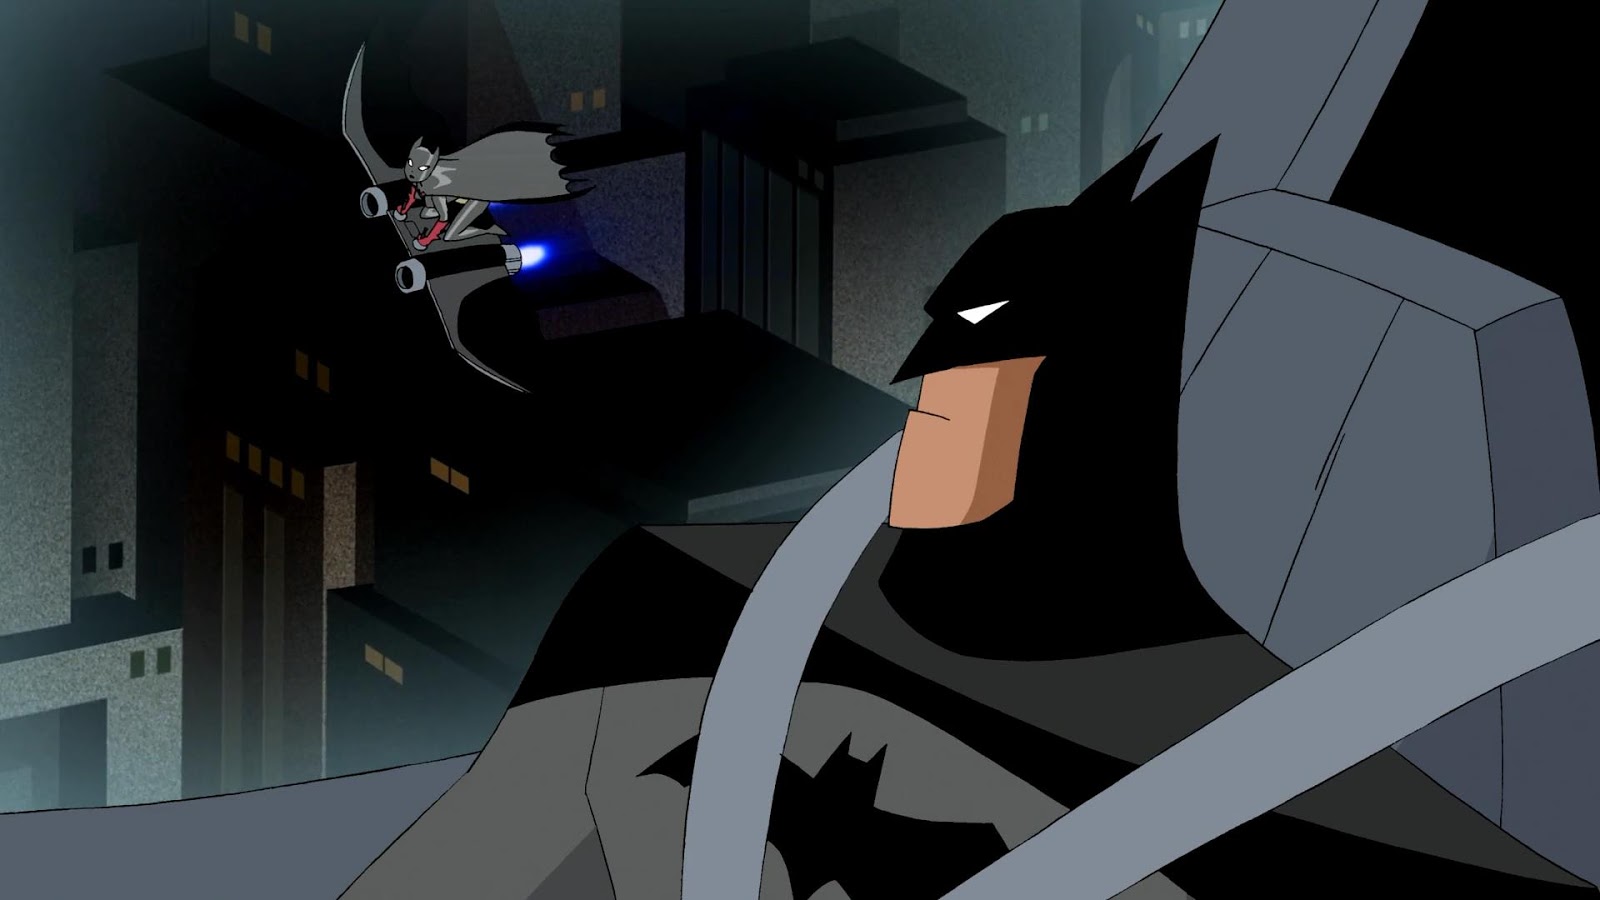 Batman batwoman. Бэтмен: тайна Бэтвумен 2003. Бэтмен тайна Бэтвумен Робин. Бэтмен и тайна женщины-летучей мыши (2003).